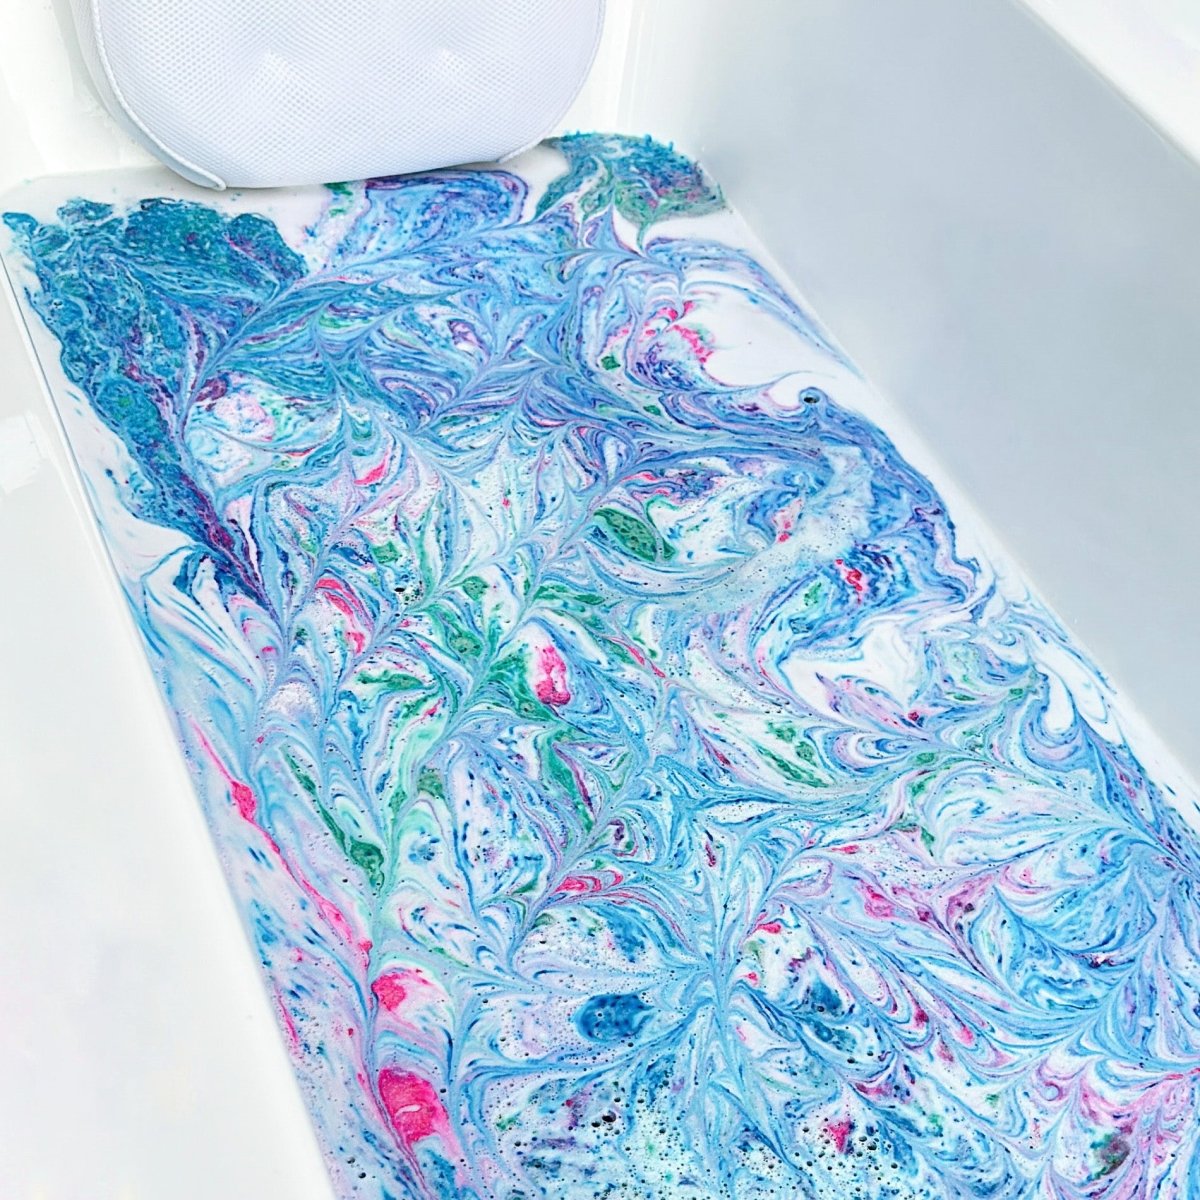 Lagoon Bath Dust for Kids & Adults - Colourful Glitters & Fairy Bread Fragrance - Made in Australia by Bath Box